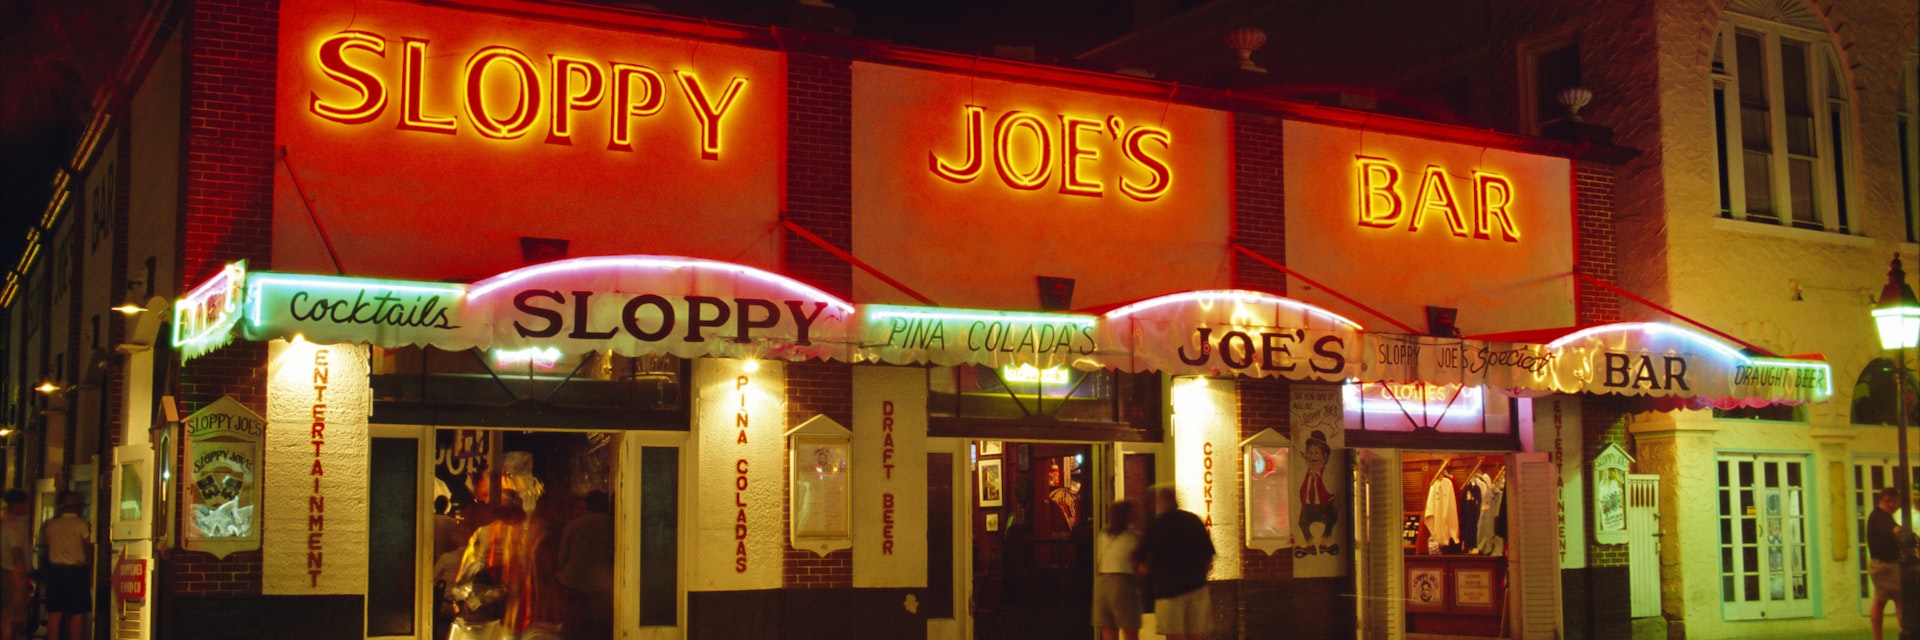 Sloppy Joe's Bar, Duval Street, Key West, Florida, USA